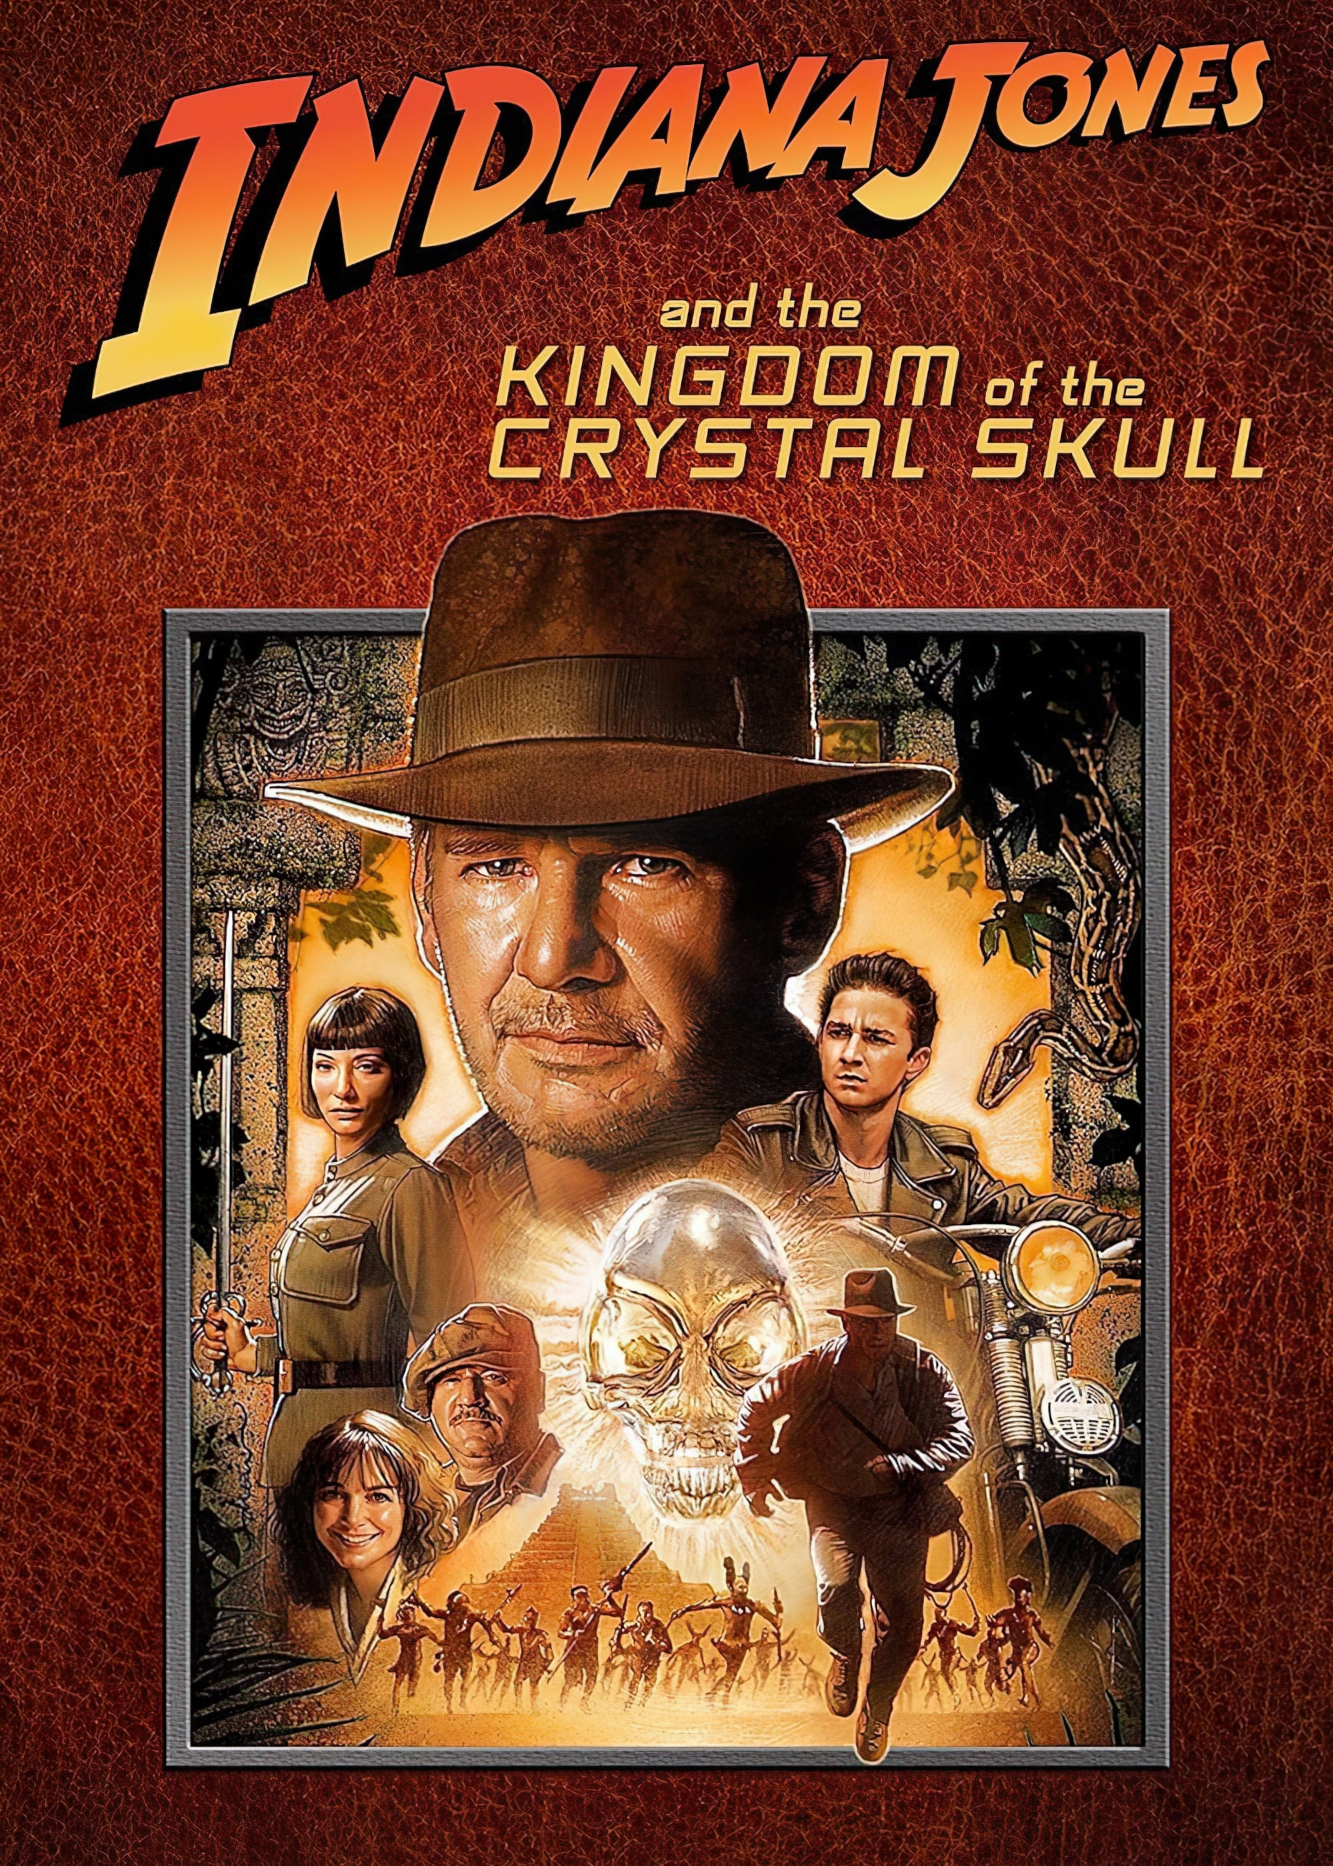 Xem Phim Indiana Jones và vuong quôc so nguoi (Indiana Jones and the Kingdom of the Crystal Skull )